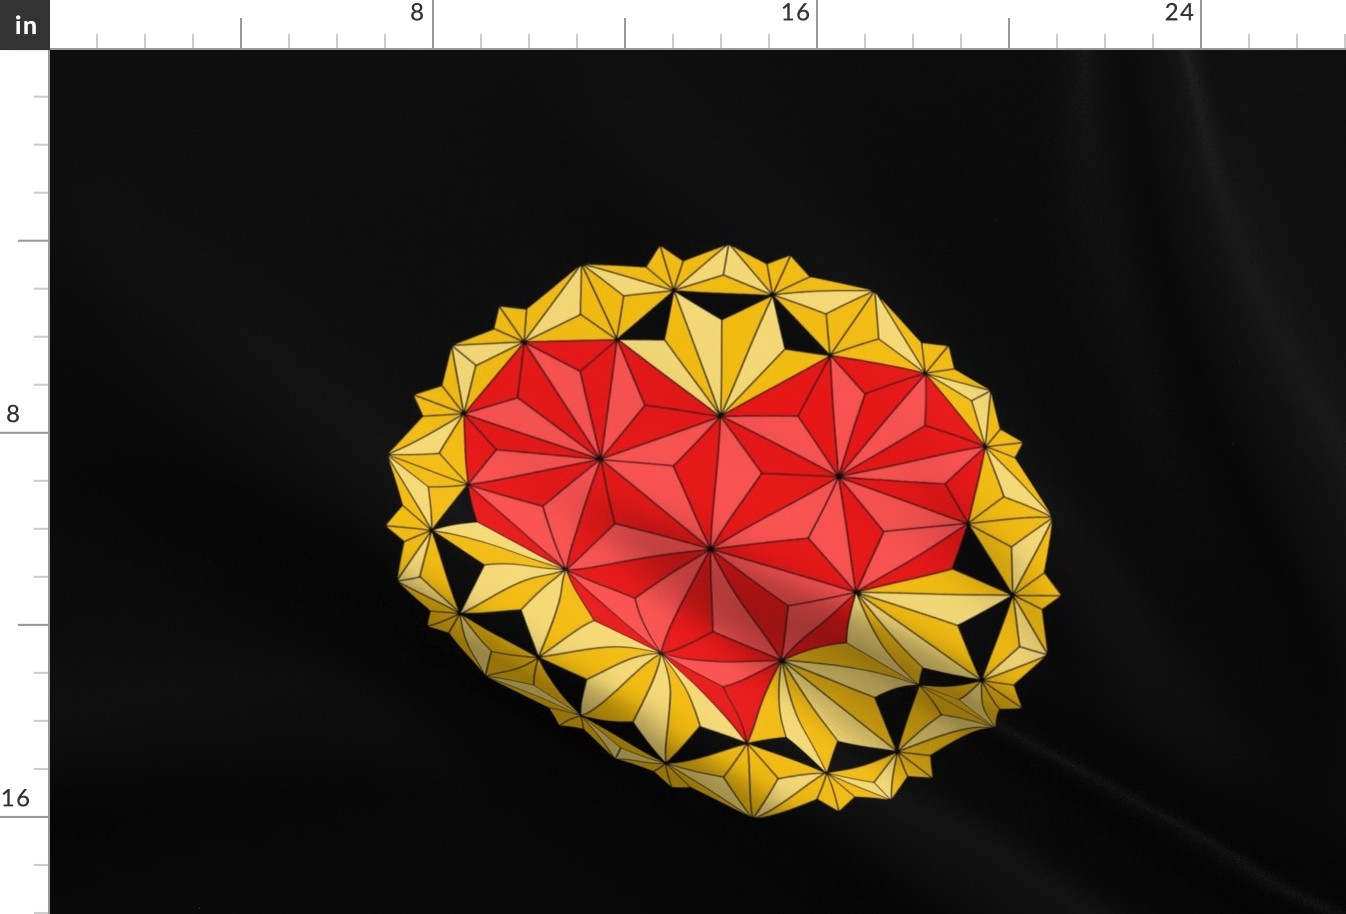 (Tea) Origami Heart Tea Towel 27x18 Black by LeonardosCompass 14149454